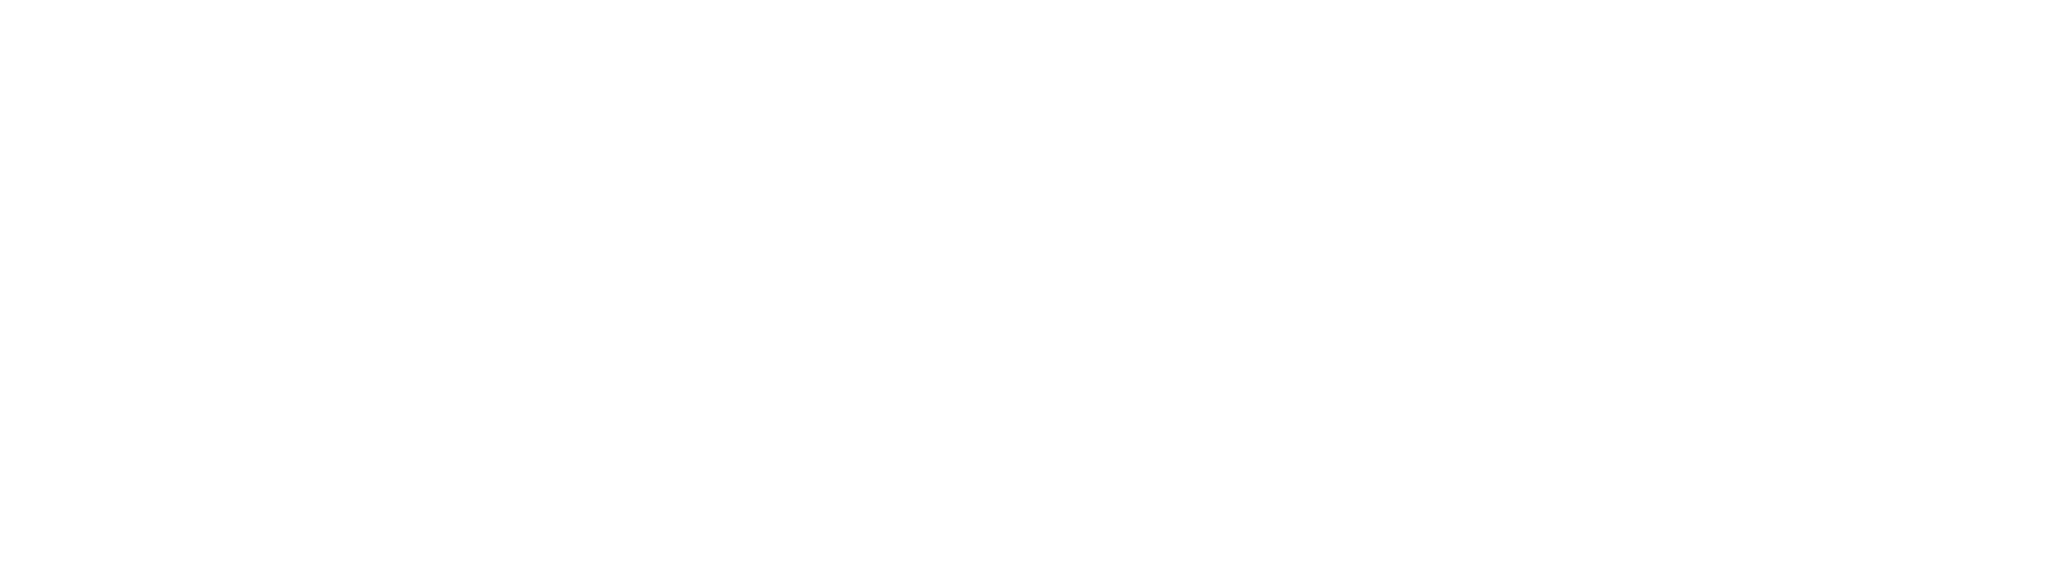 ye olde squire logo